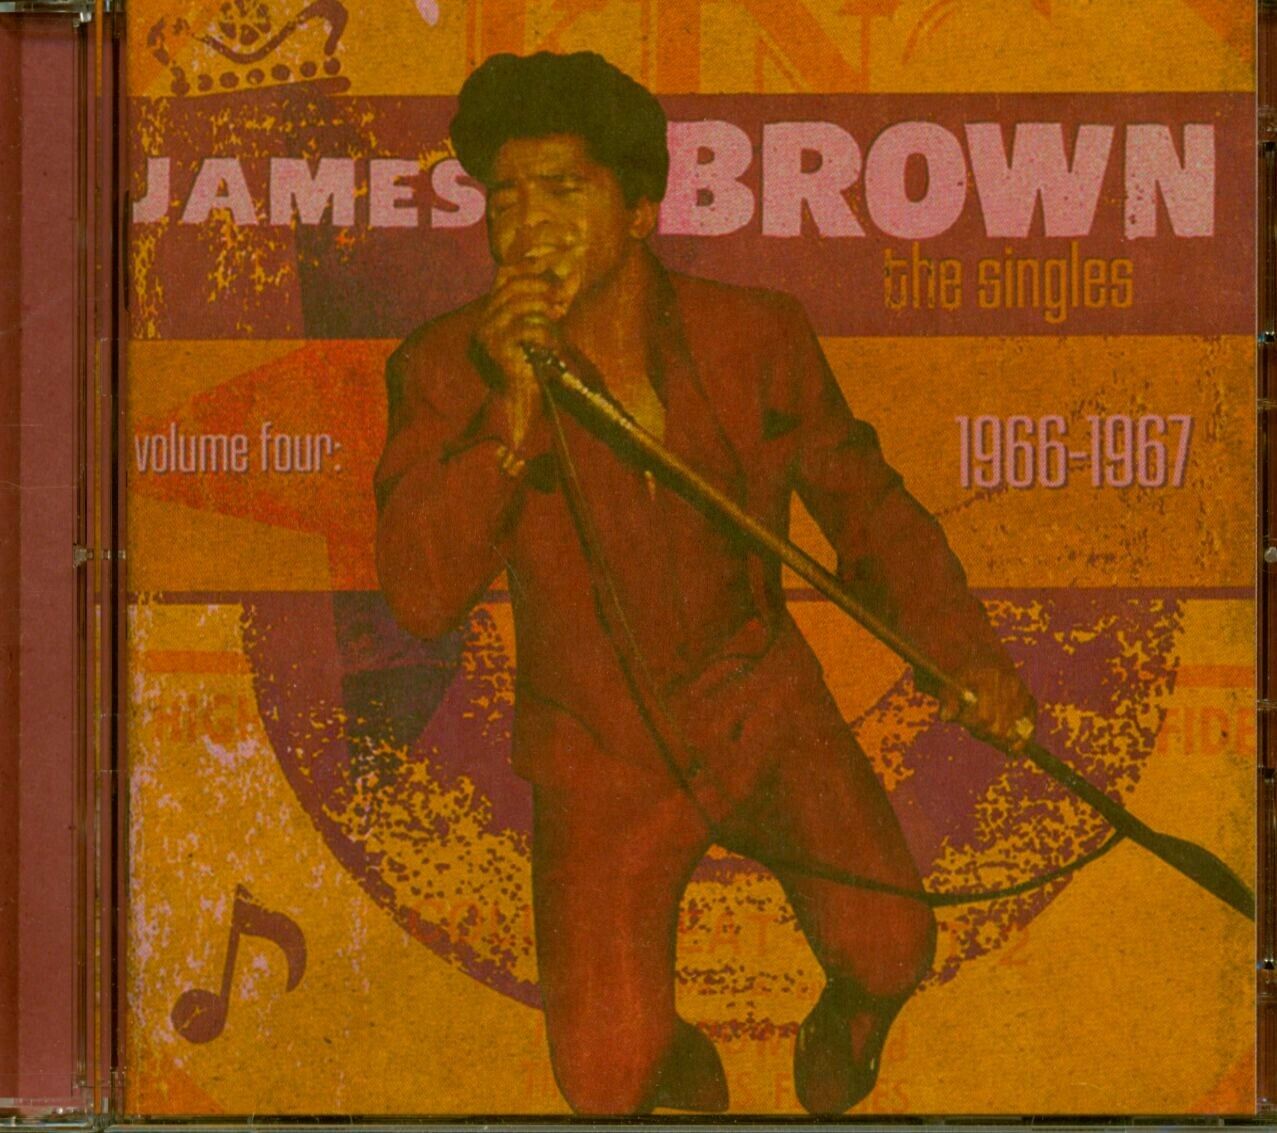 Singles 4: 1966-1967 by James Brown (James Brown The Singles Vol.4  2 CD) Sealed